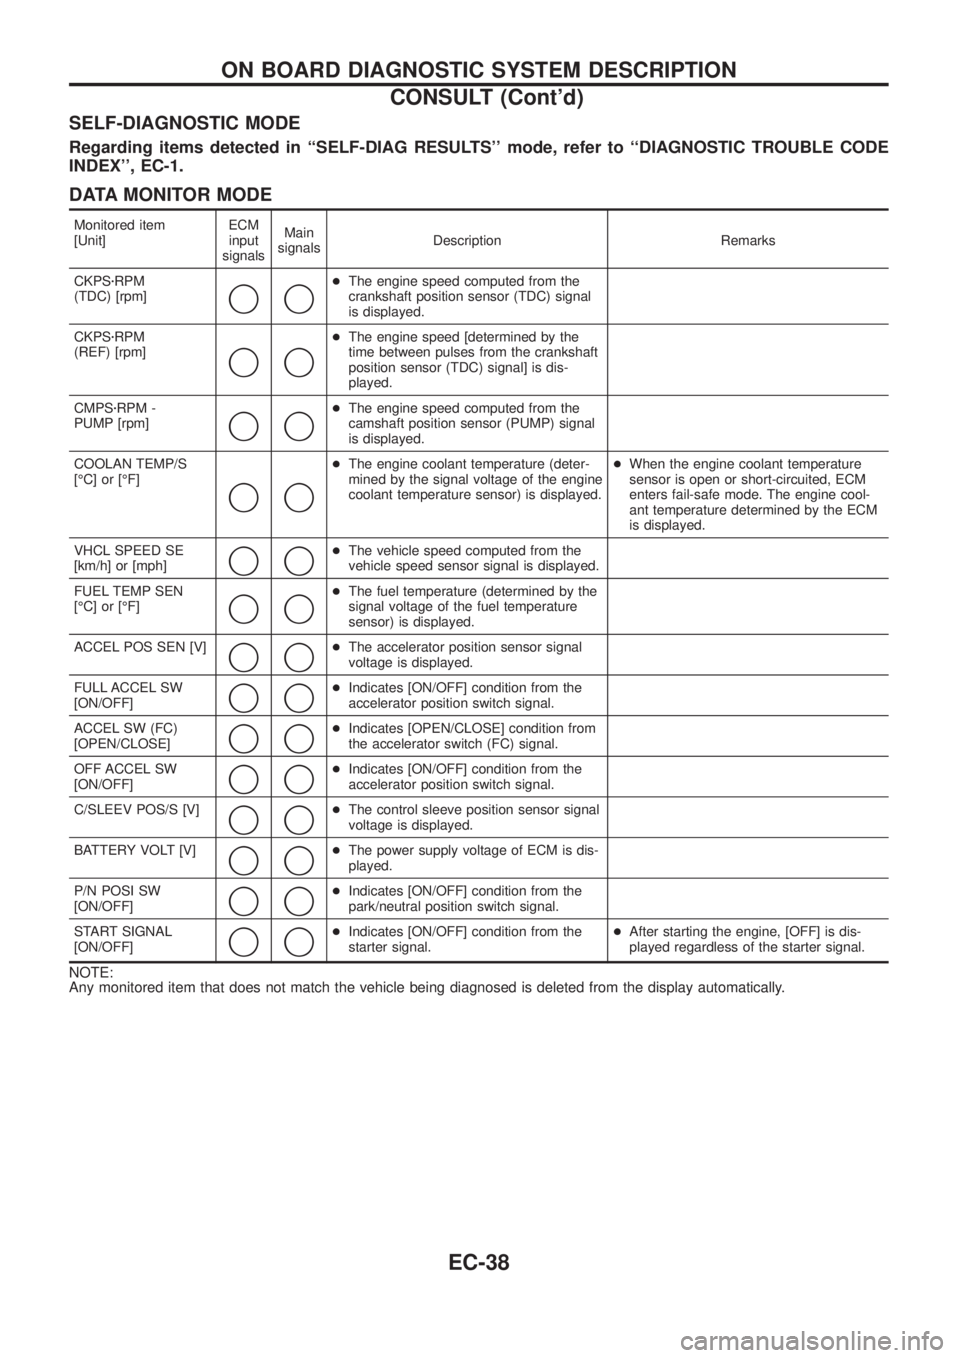 NISSAN PATROL 2006  Service Manual SELF-DIAGNOSTIC MODE
Regarding items detected in ``SELF-DIAG RESULTS mode, refer to ``DIAGNOSTIC TROUBLE CODE
INDEX, EC-1.
DATA MONITOR MODE
Monitored item
[Unit]ECM
input
signalsMain
signalsDescr